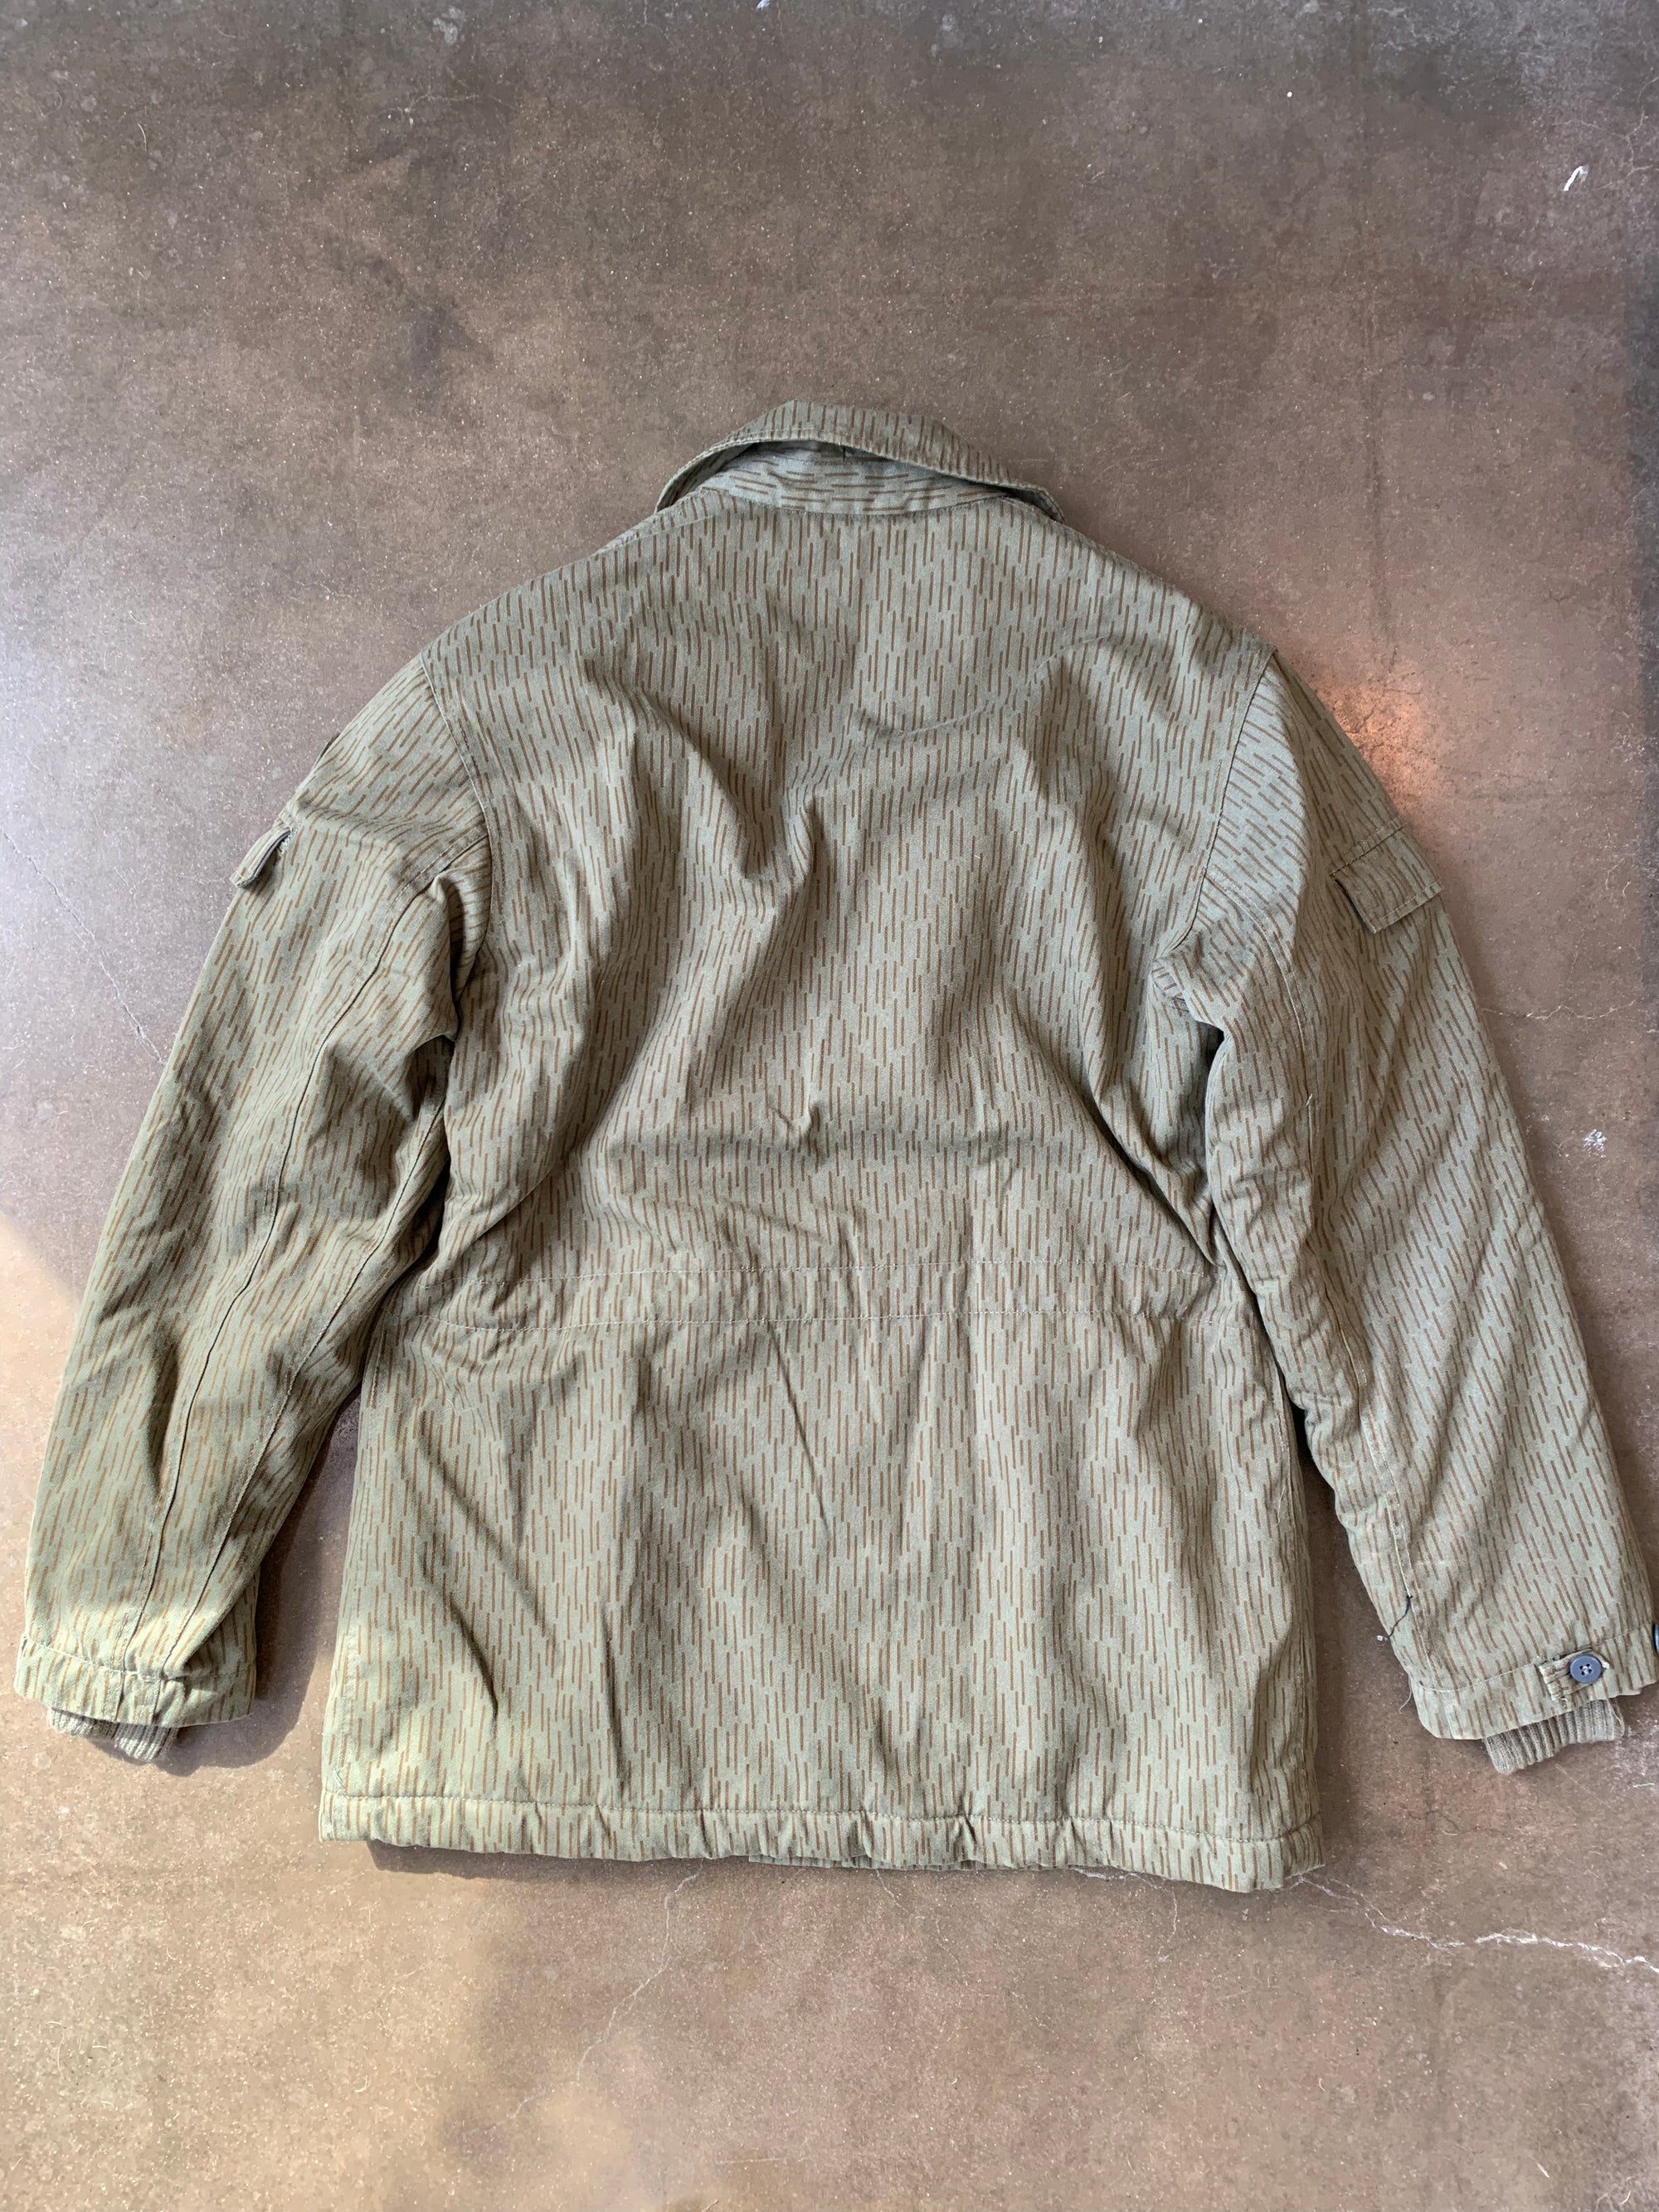 Vintage German Military Issue Raindrop Camo Jacket